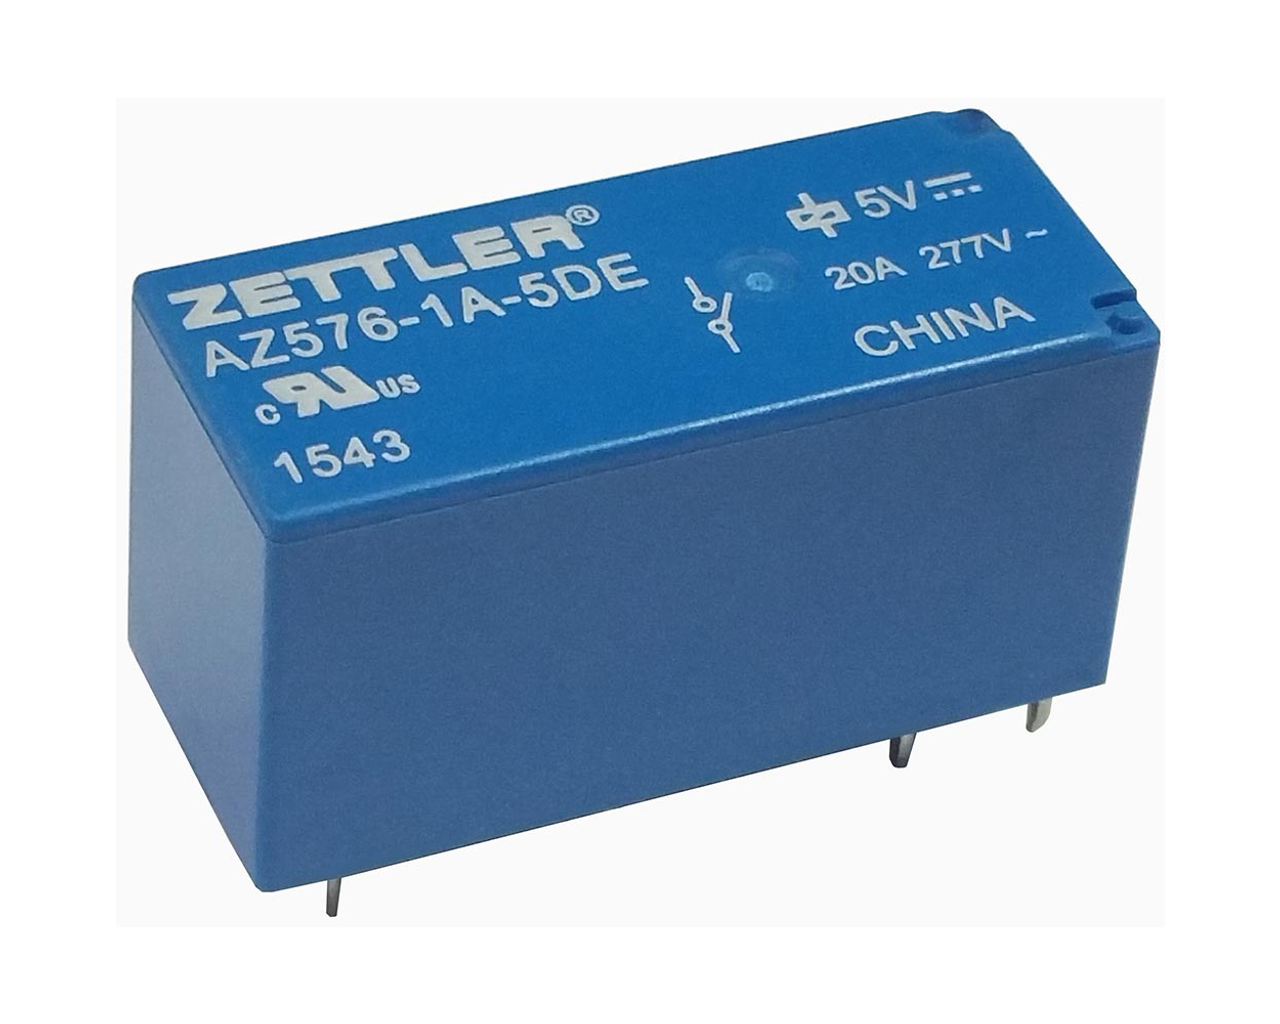 American Zettler AZ576-1A-9DE Power Relay